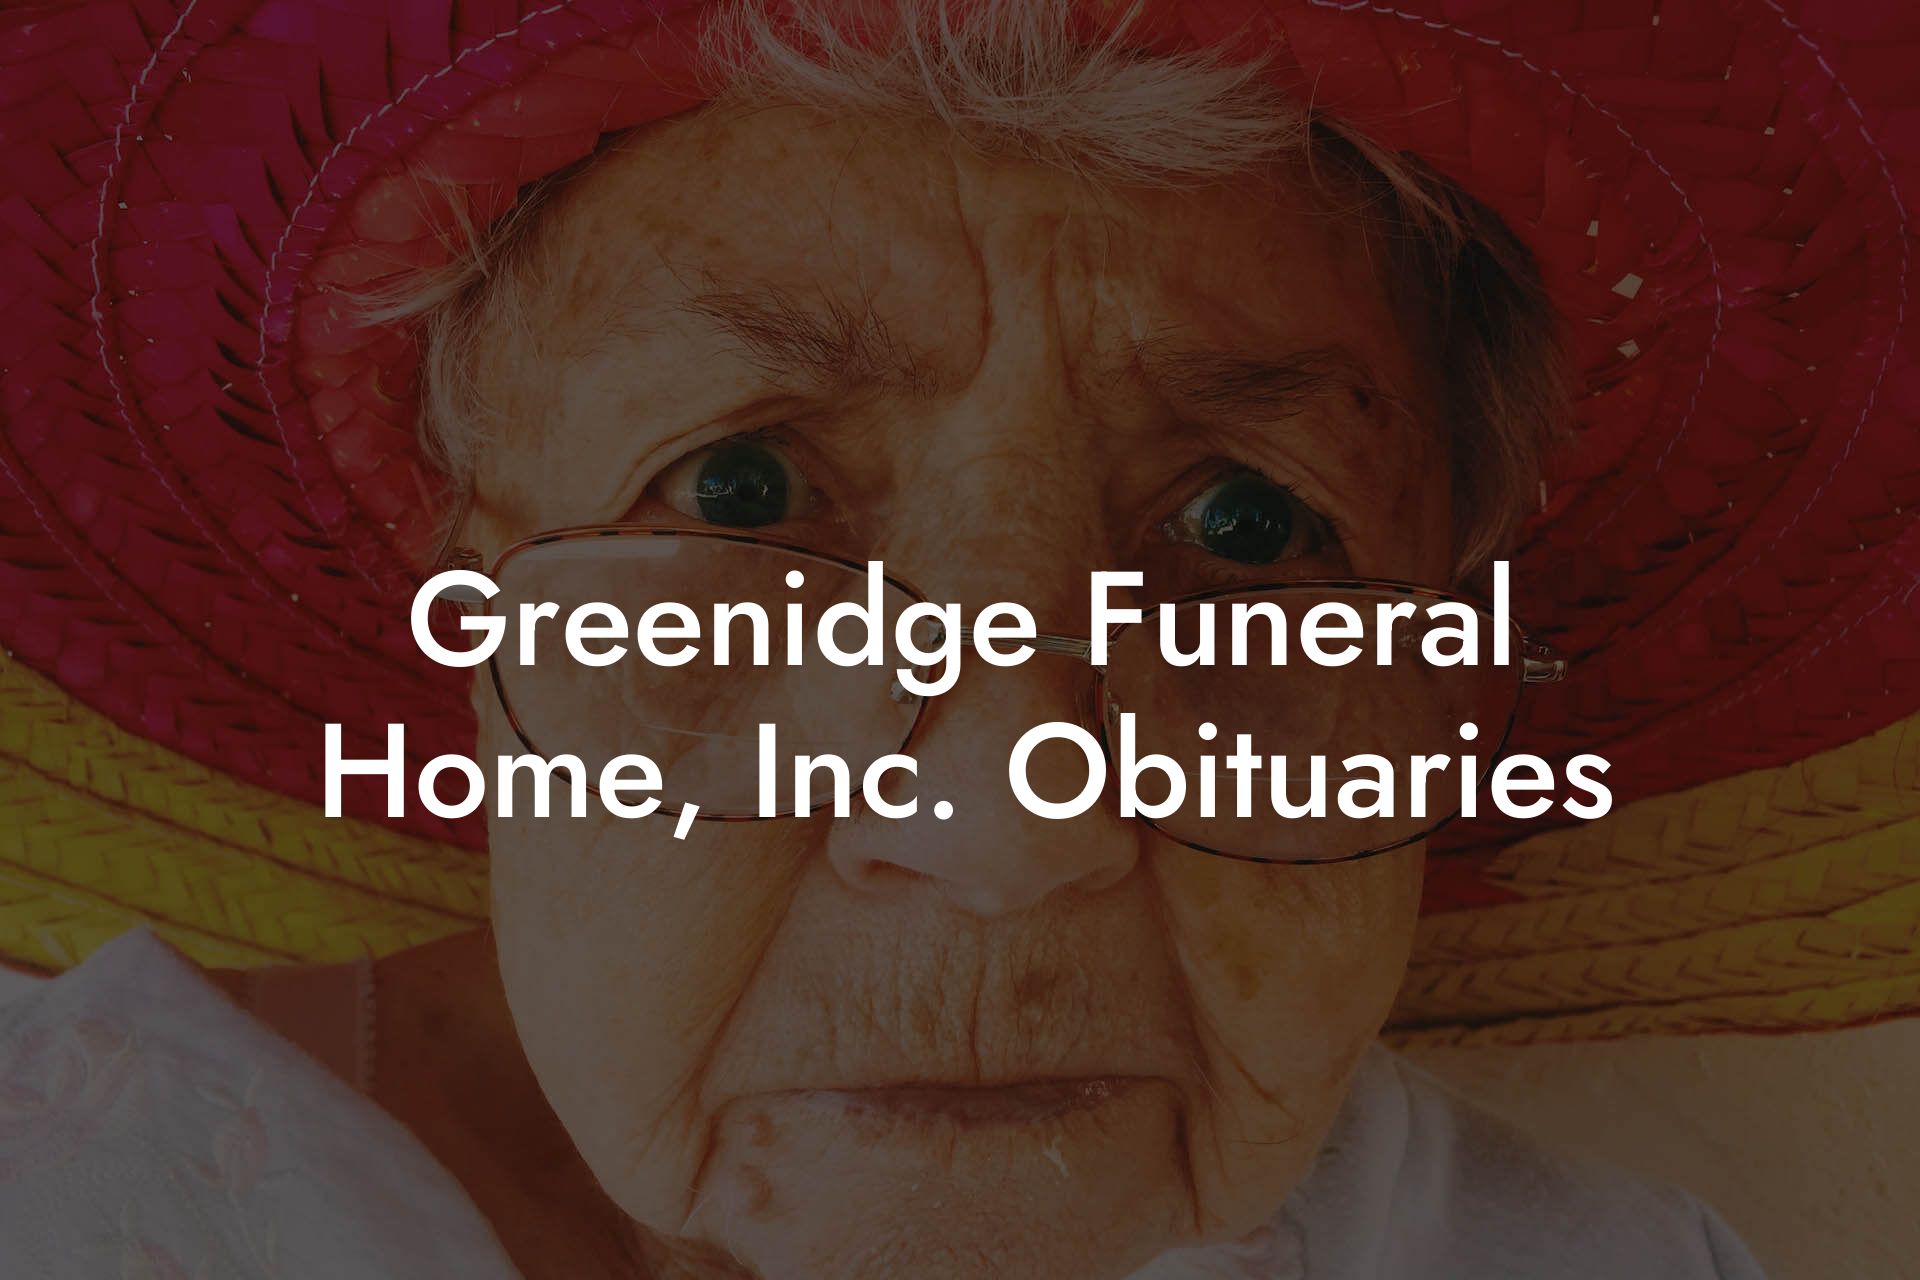 Greenidge Funeral Home, Inc. Obituaries